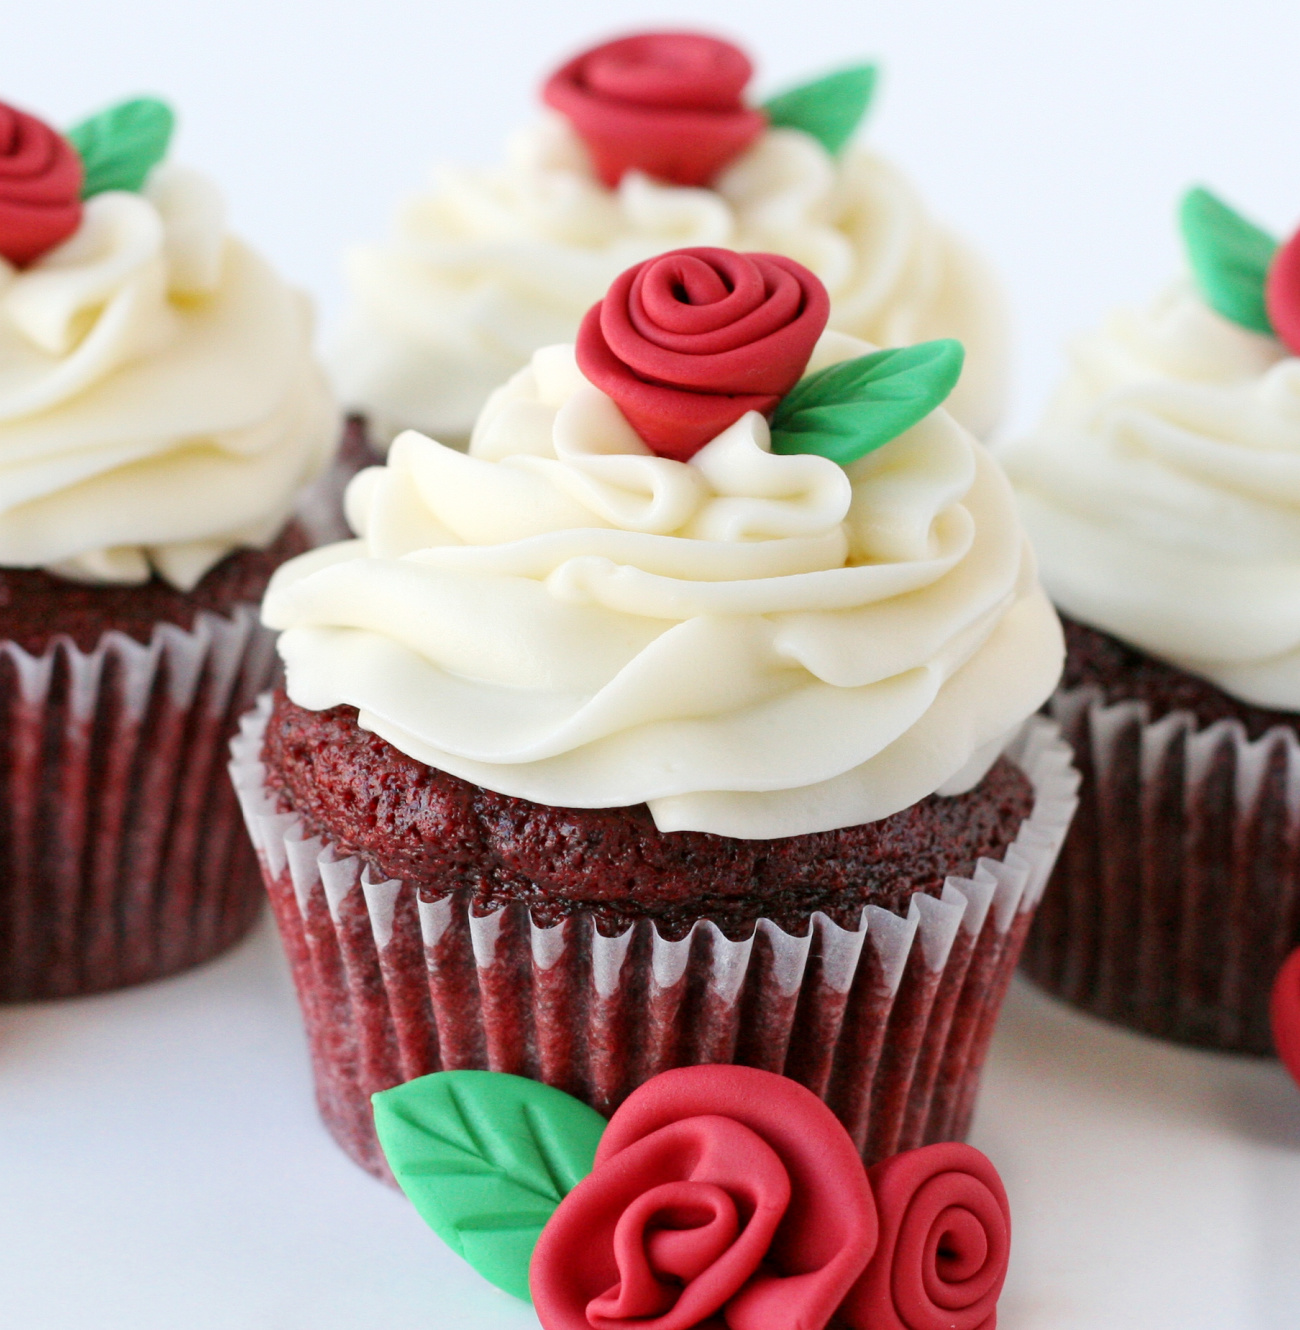 The Red Velvet Cupcakes - Treats